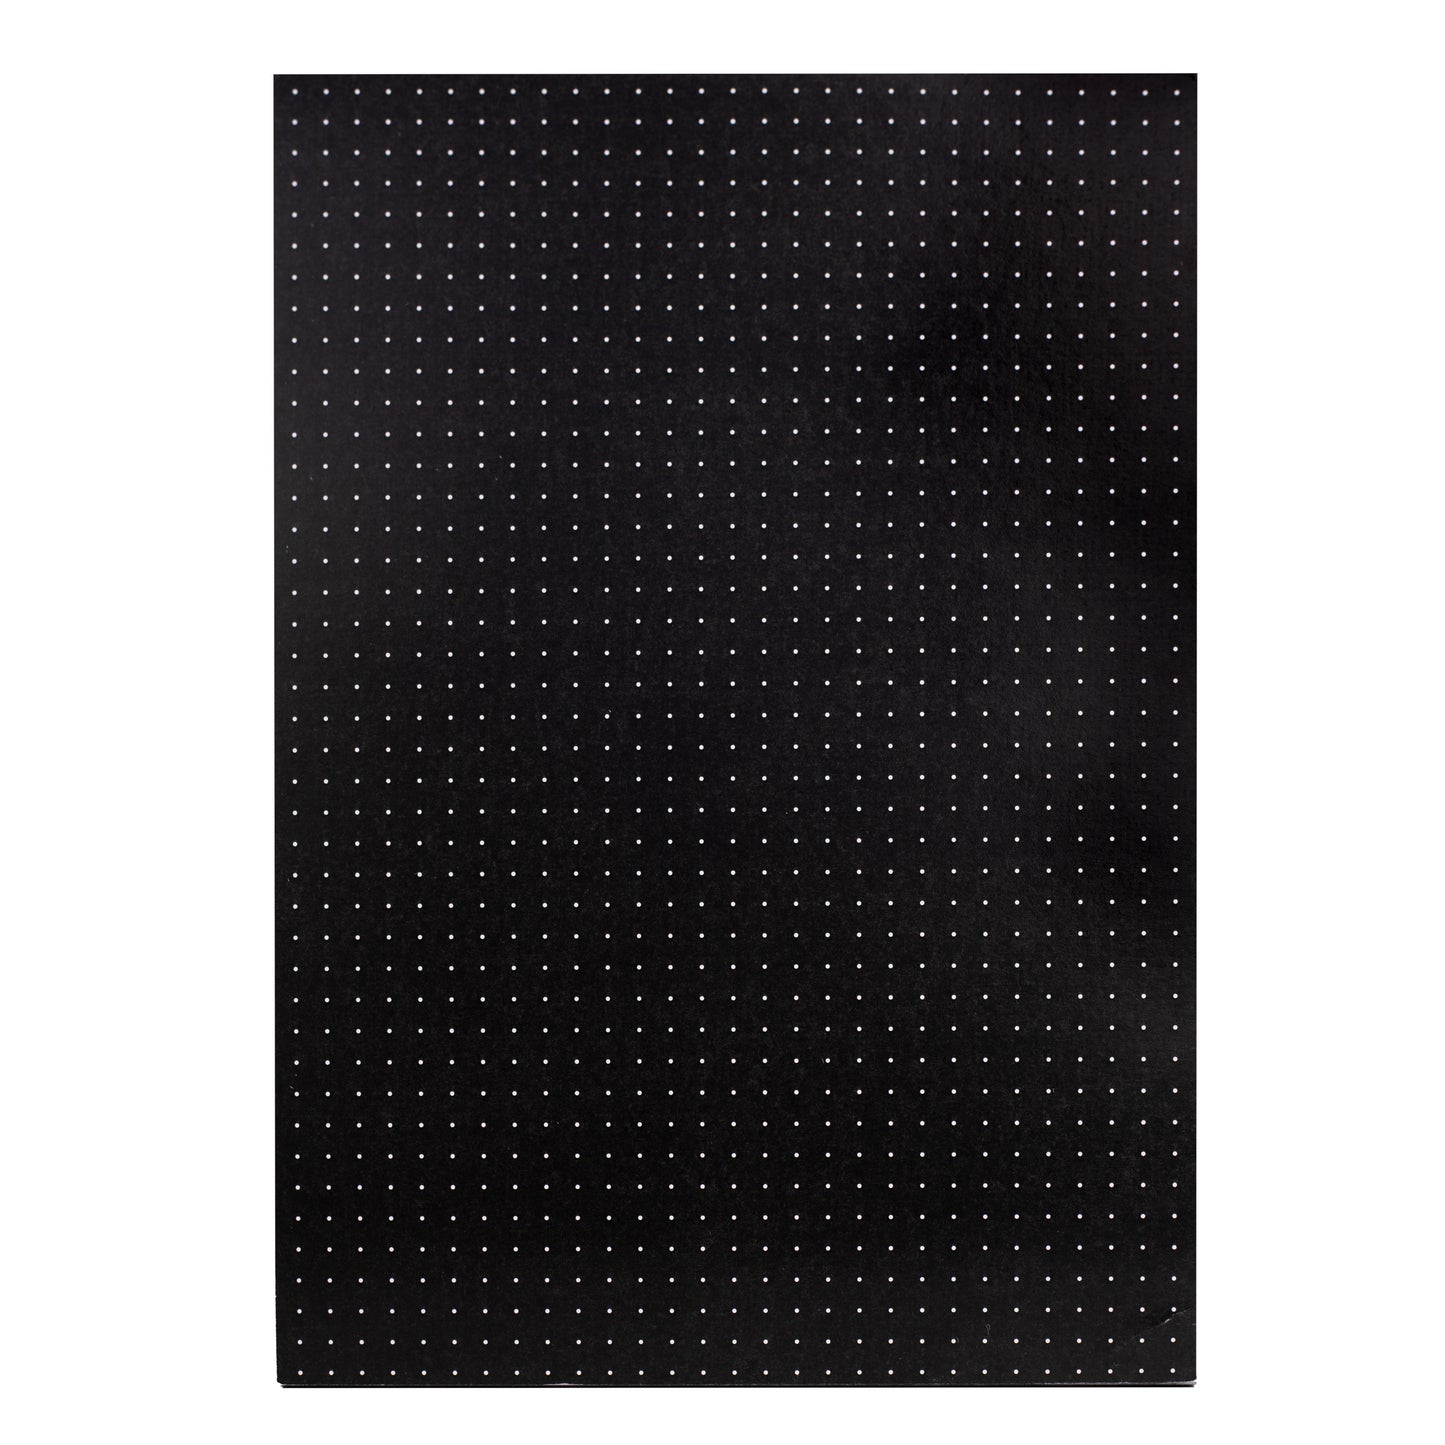 Dot Grid Journal Paper Pad